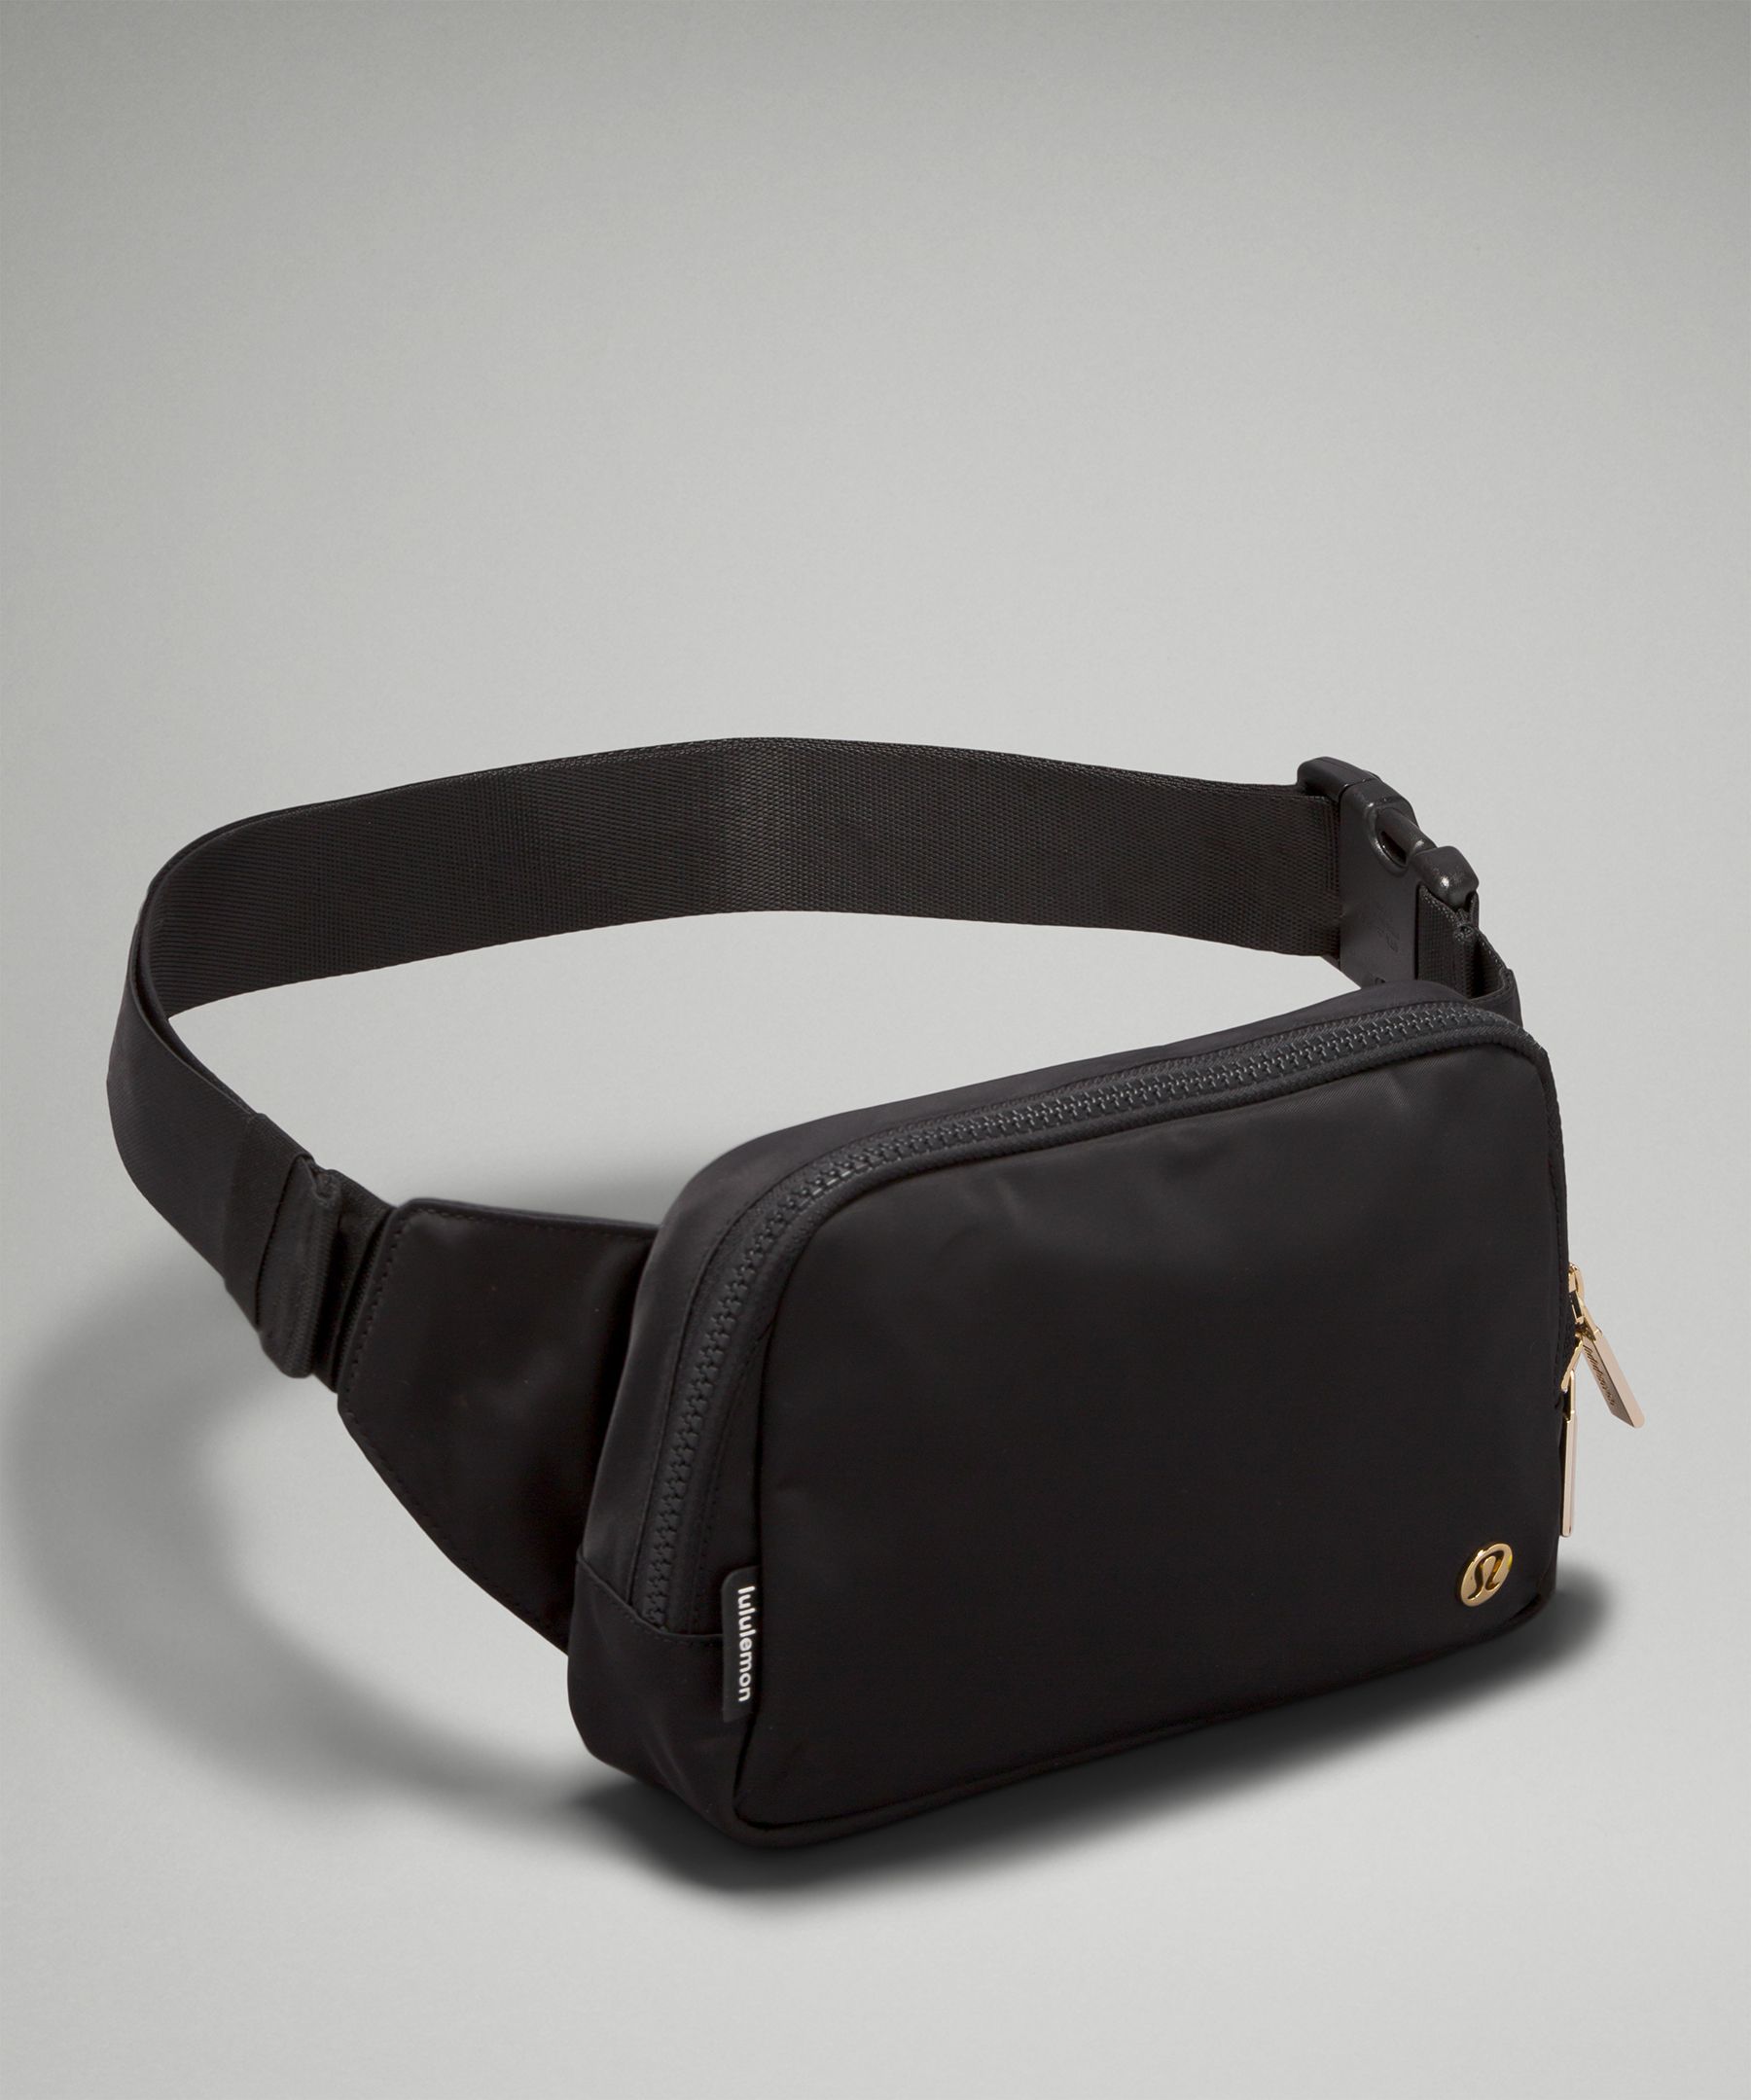 Lululemon Everywhere Belt Bag: The Perfect Gift for Her - InsideHook